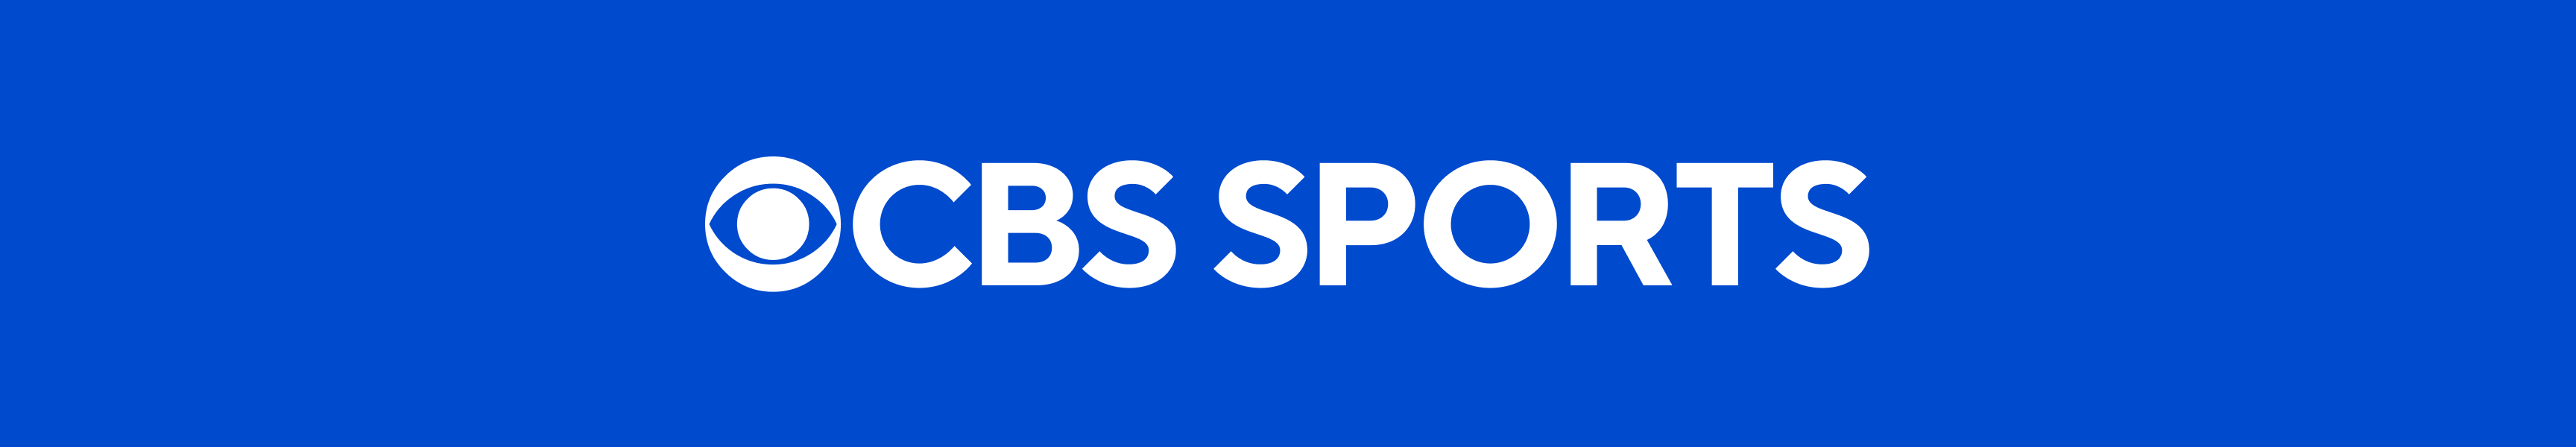 CBS Sports Camisetas de manga larga